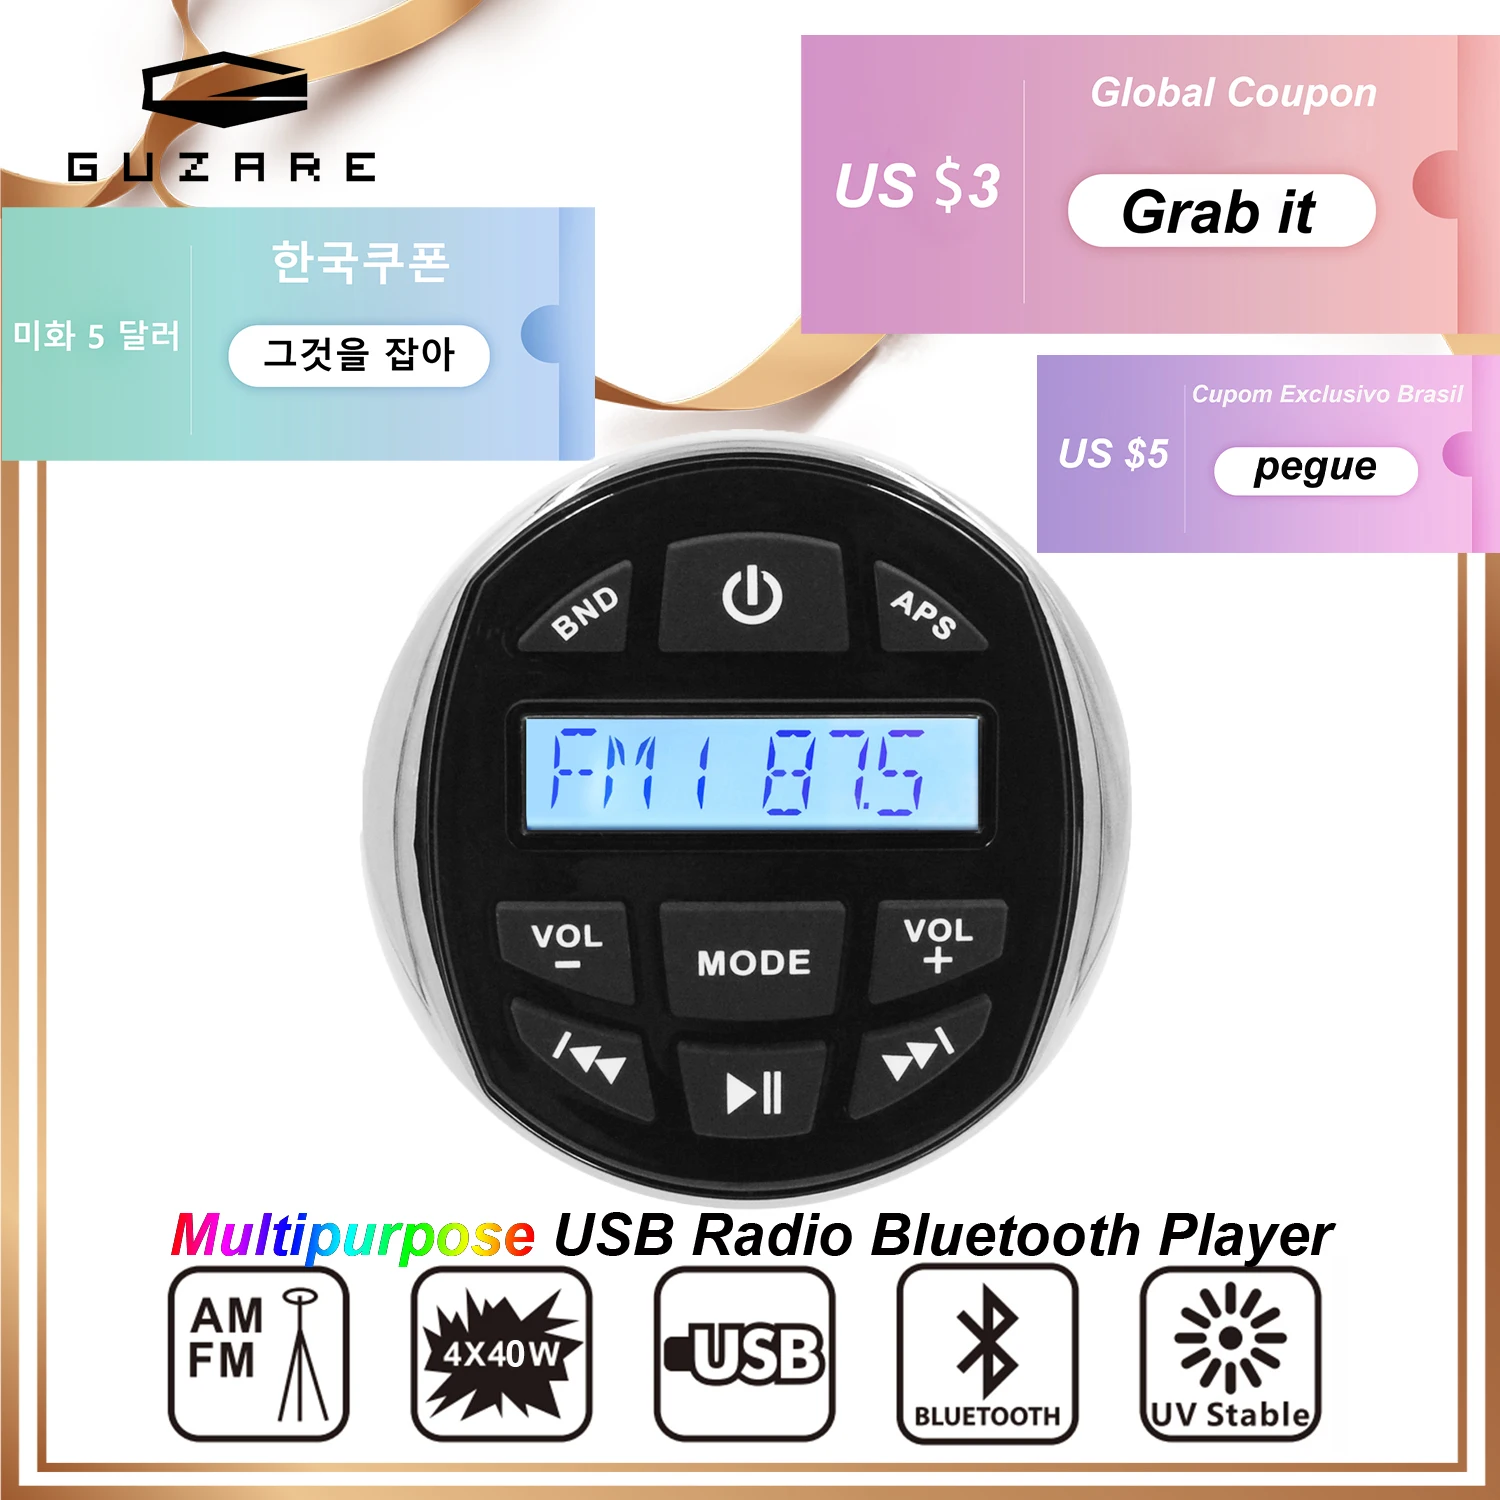 Guzare-Radio Estéreo Marina impermeable, reproductor MP3, USB, Bluetooth, para ATVs, Jet Ski, barcos, sistema de Audio de sonido de transmisión inalámbrica